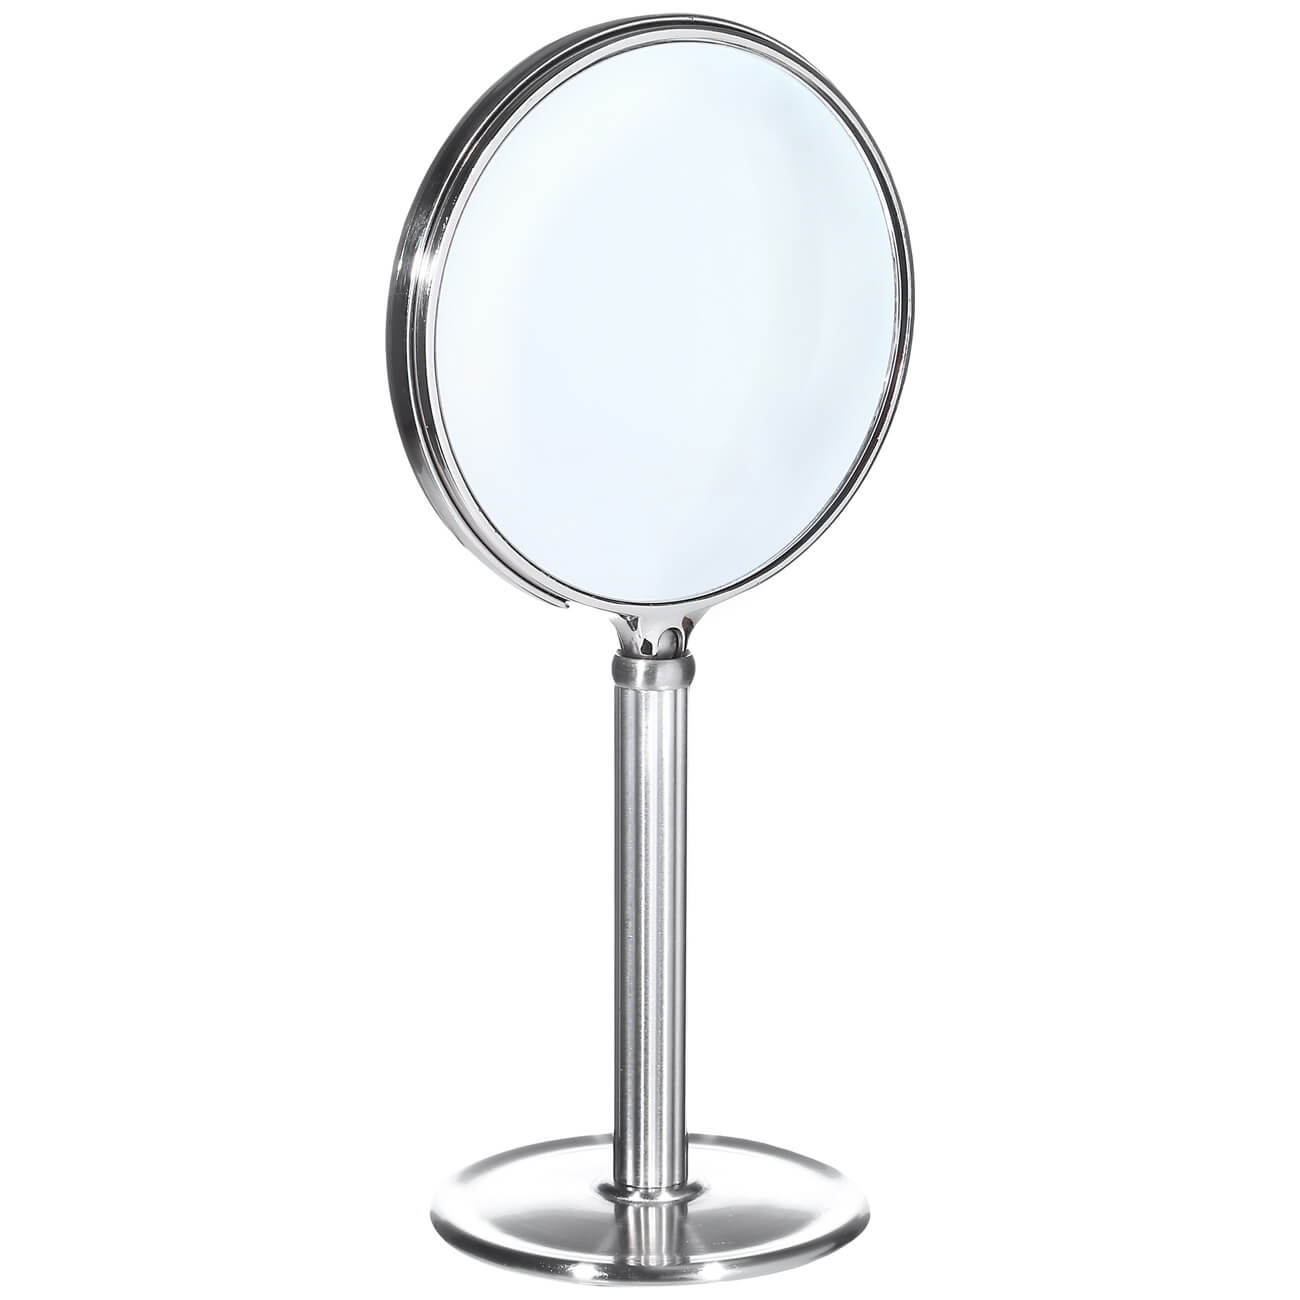 Зеркало настольное, 17 см, двустороннее, на ножке, металл, круглое, Fantastic зеркало настольное двустороннее beurer bs 49